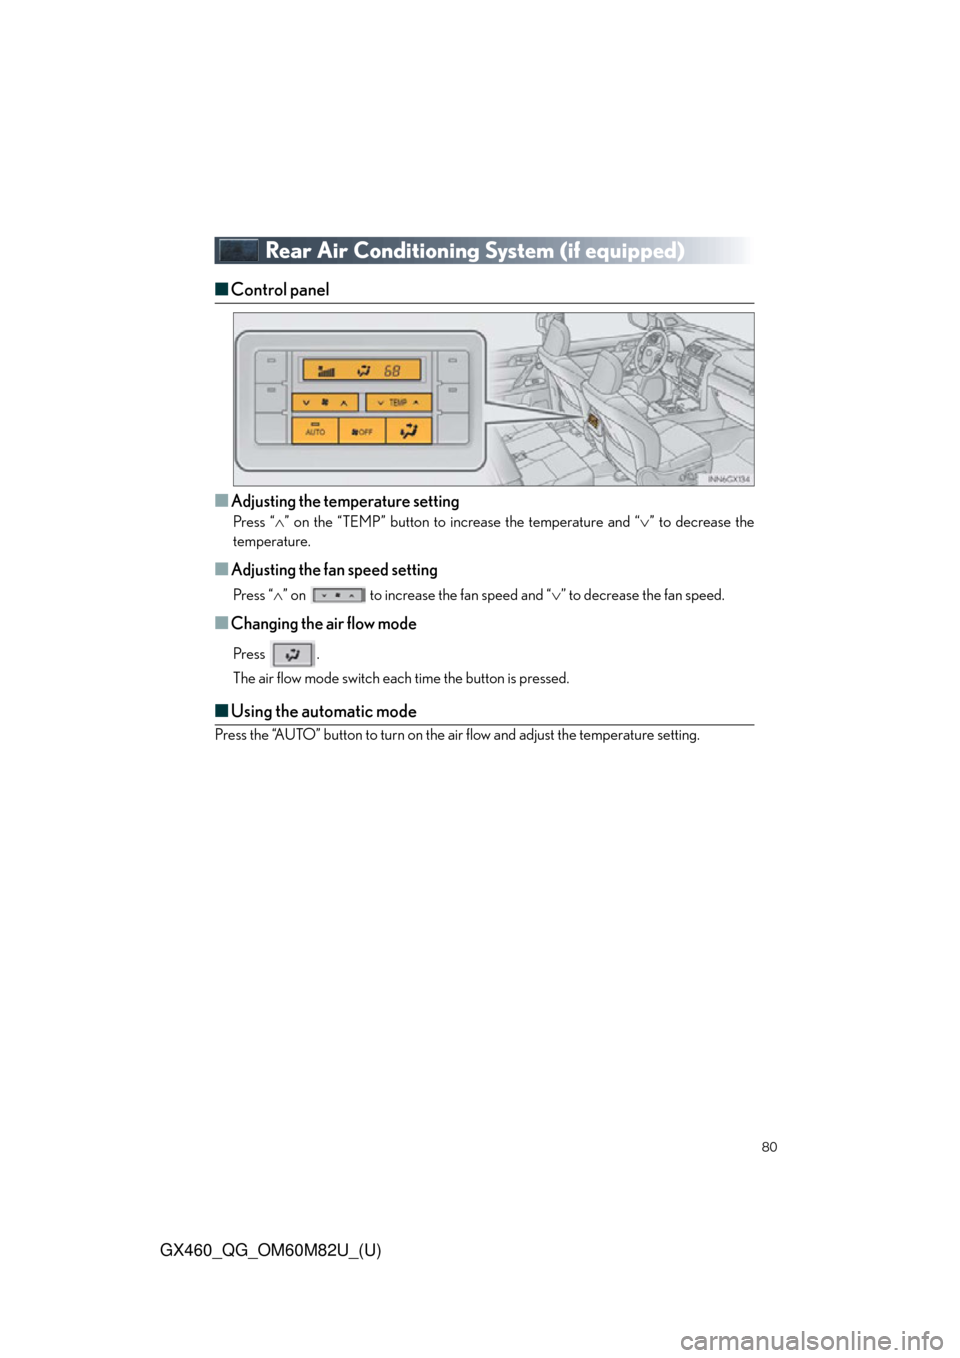 Lexus GX460 2016  Multimedia Manual / 80
GX460_QG_OM60M82U_(U)
Rear Air Conditioning System (if equipped)
■Control panel
■
Adjusting the temperature setting
Press “ ” on the “TEMP” button to increase the temperature and “